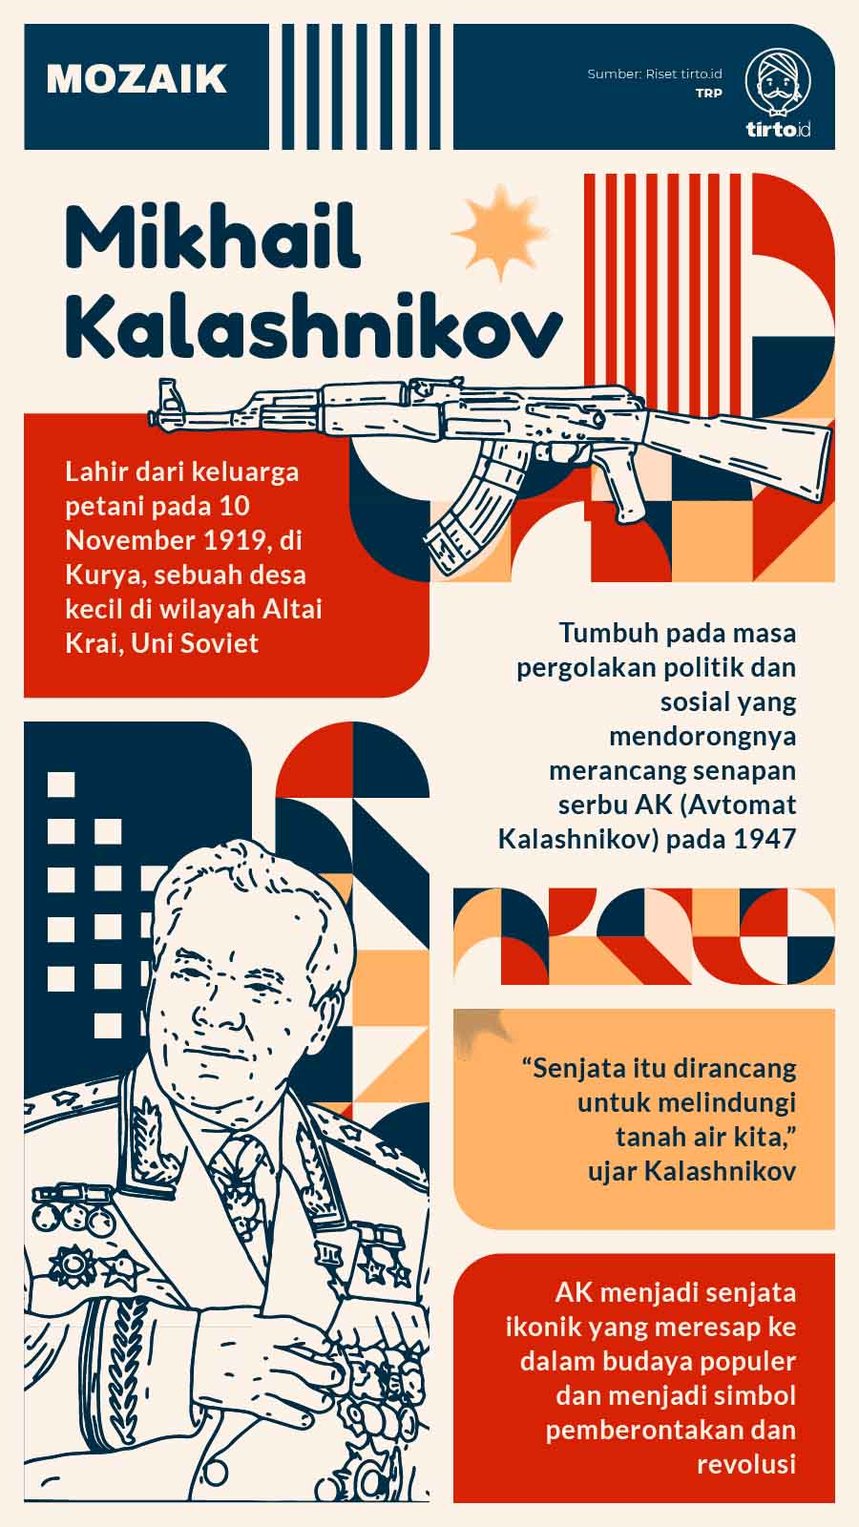 Infografik Mozaik Mikhail Kalashnikov